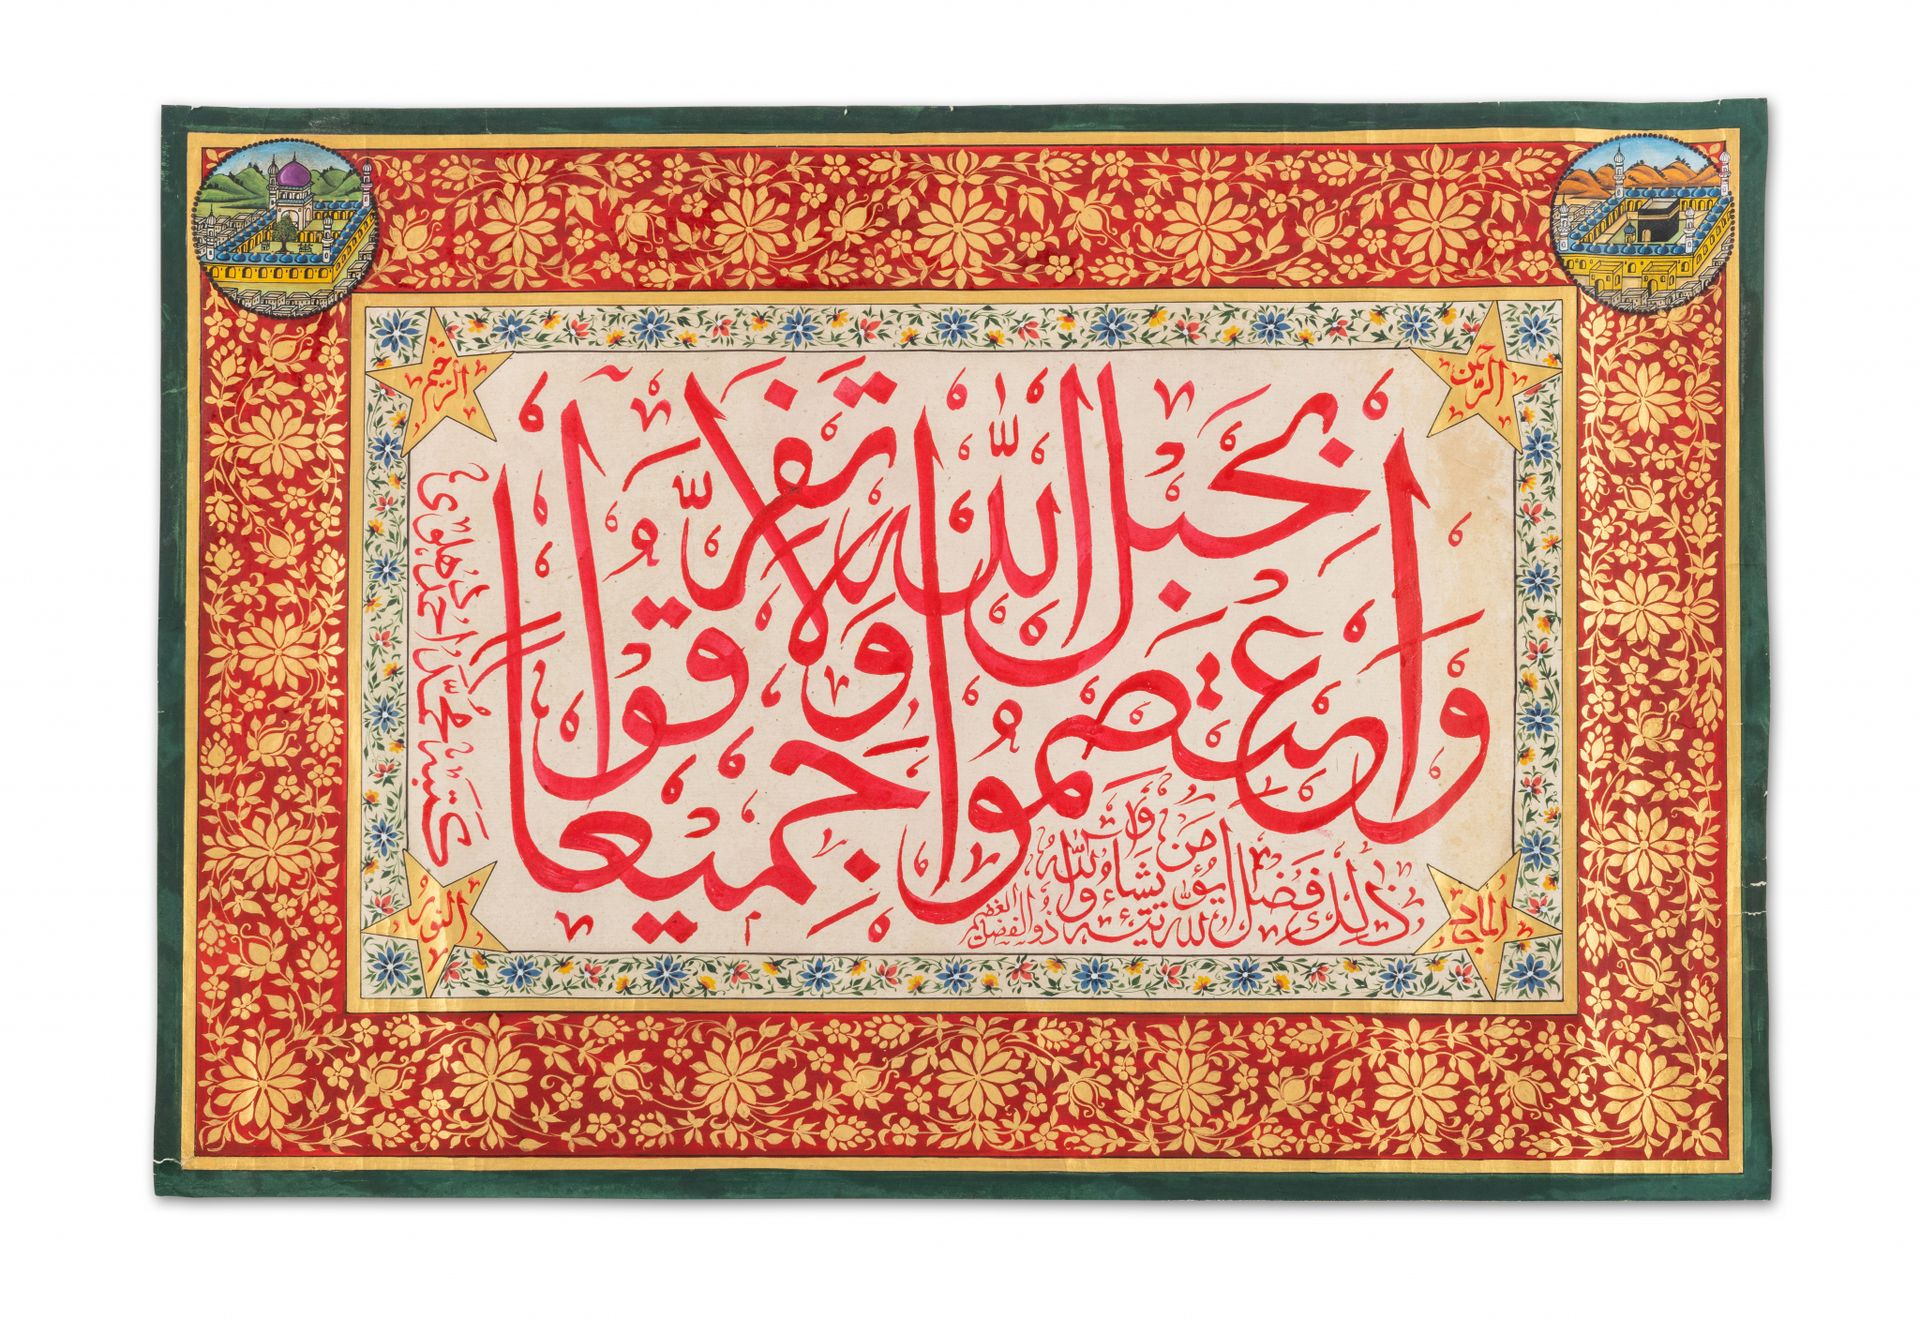 Large calligraphie India, copiato da Muhammad Ahmad ...

Calligrafia a inchiostr&hellip;